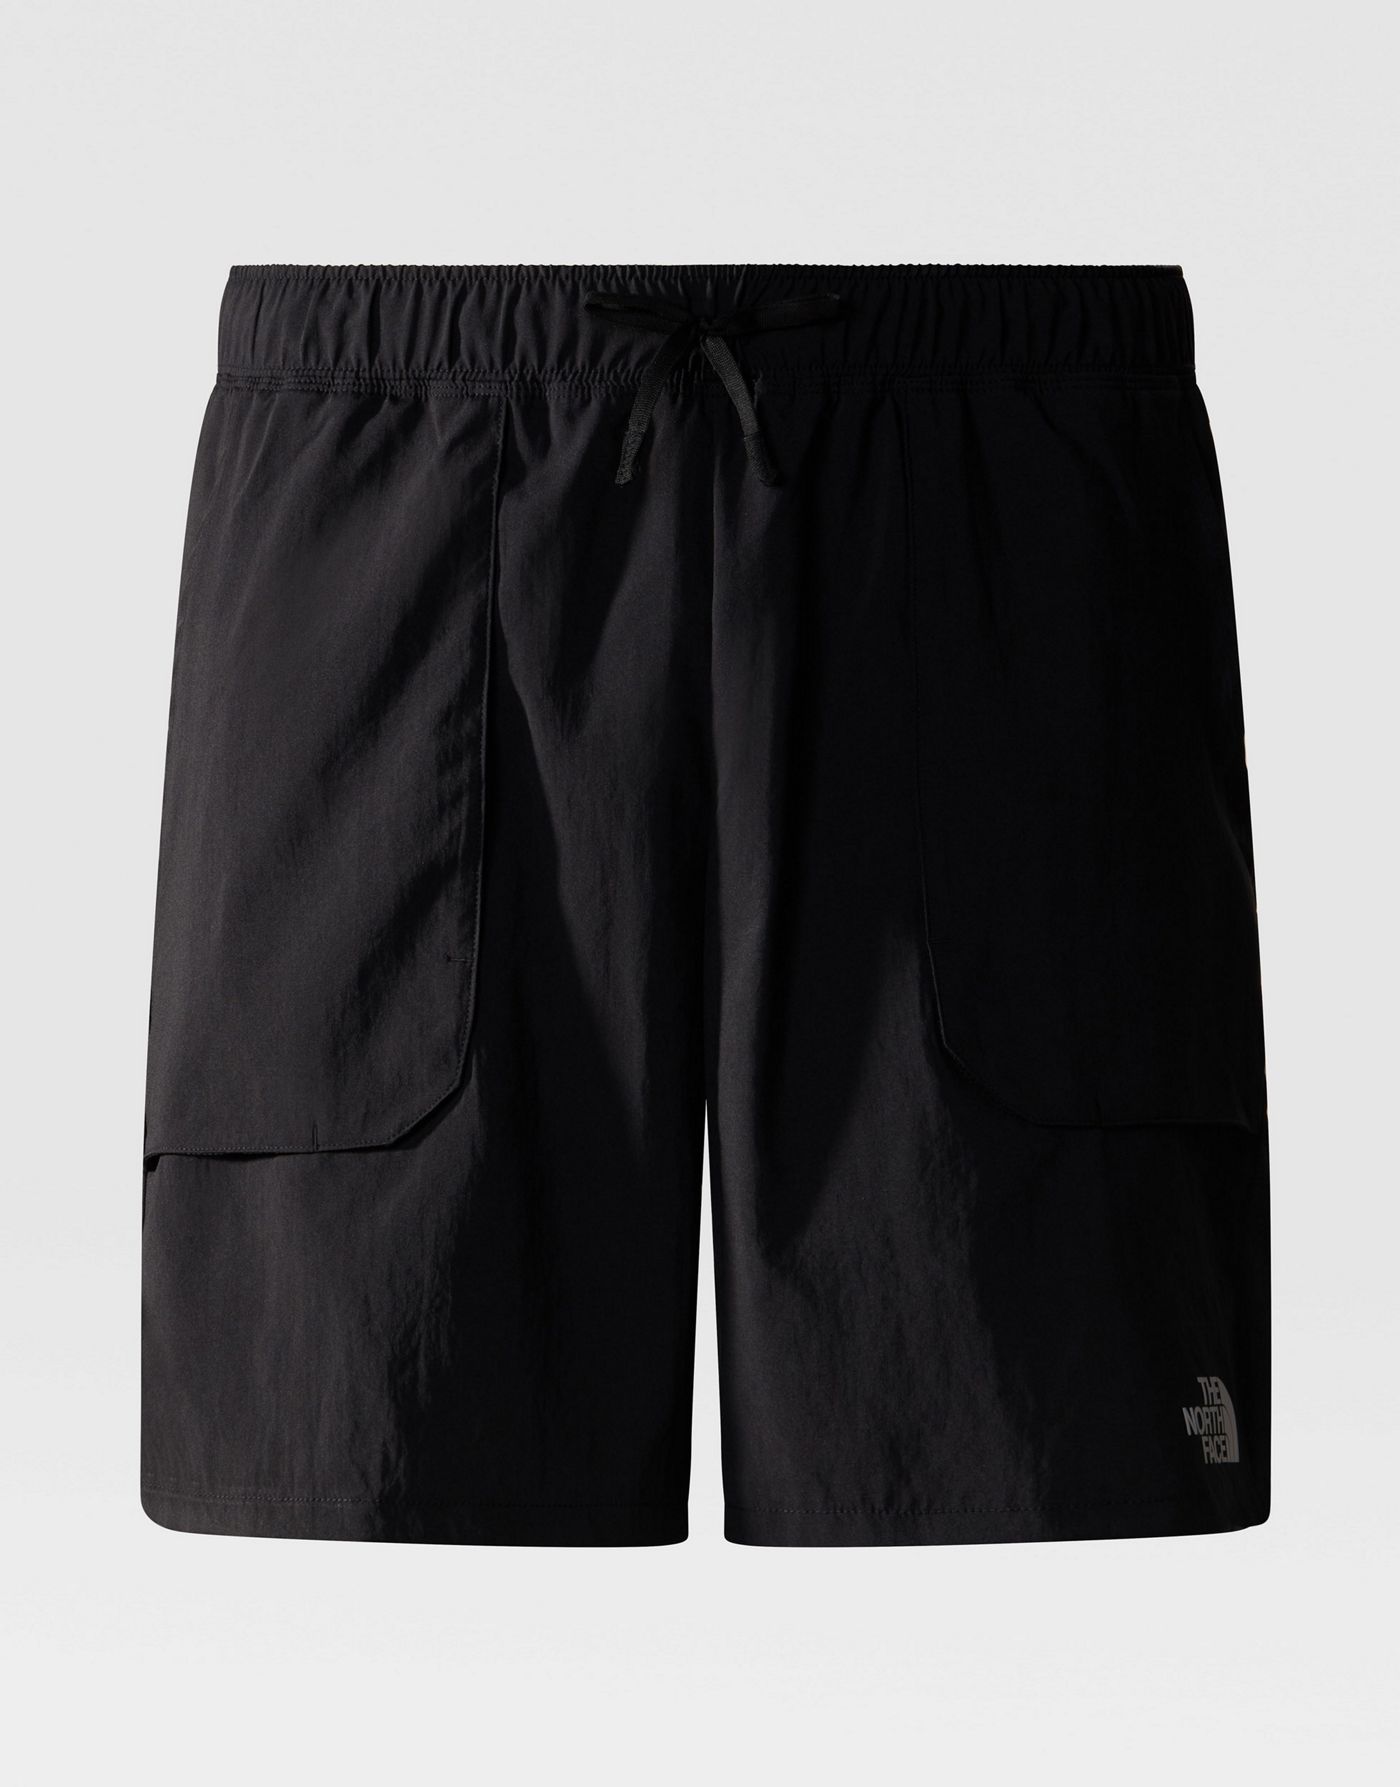 The North Face Sunriser brief shorts in black